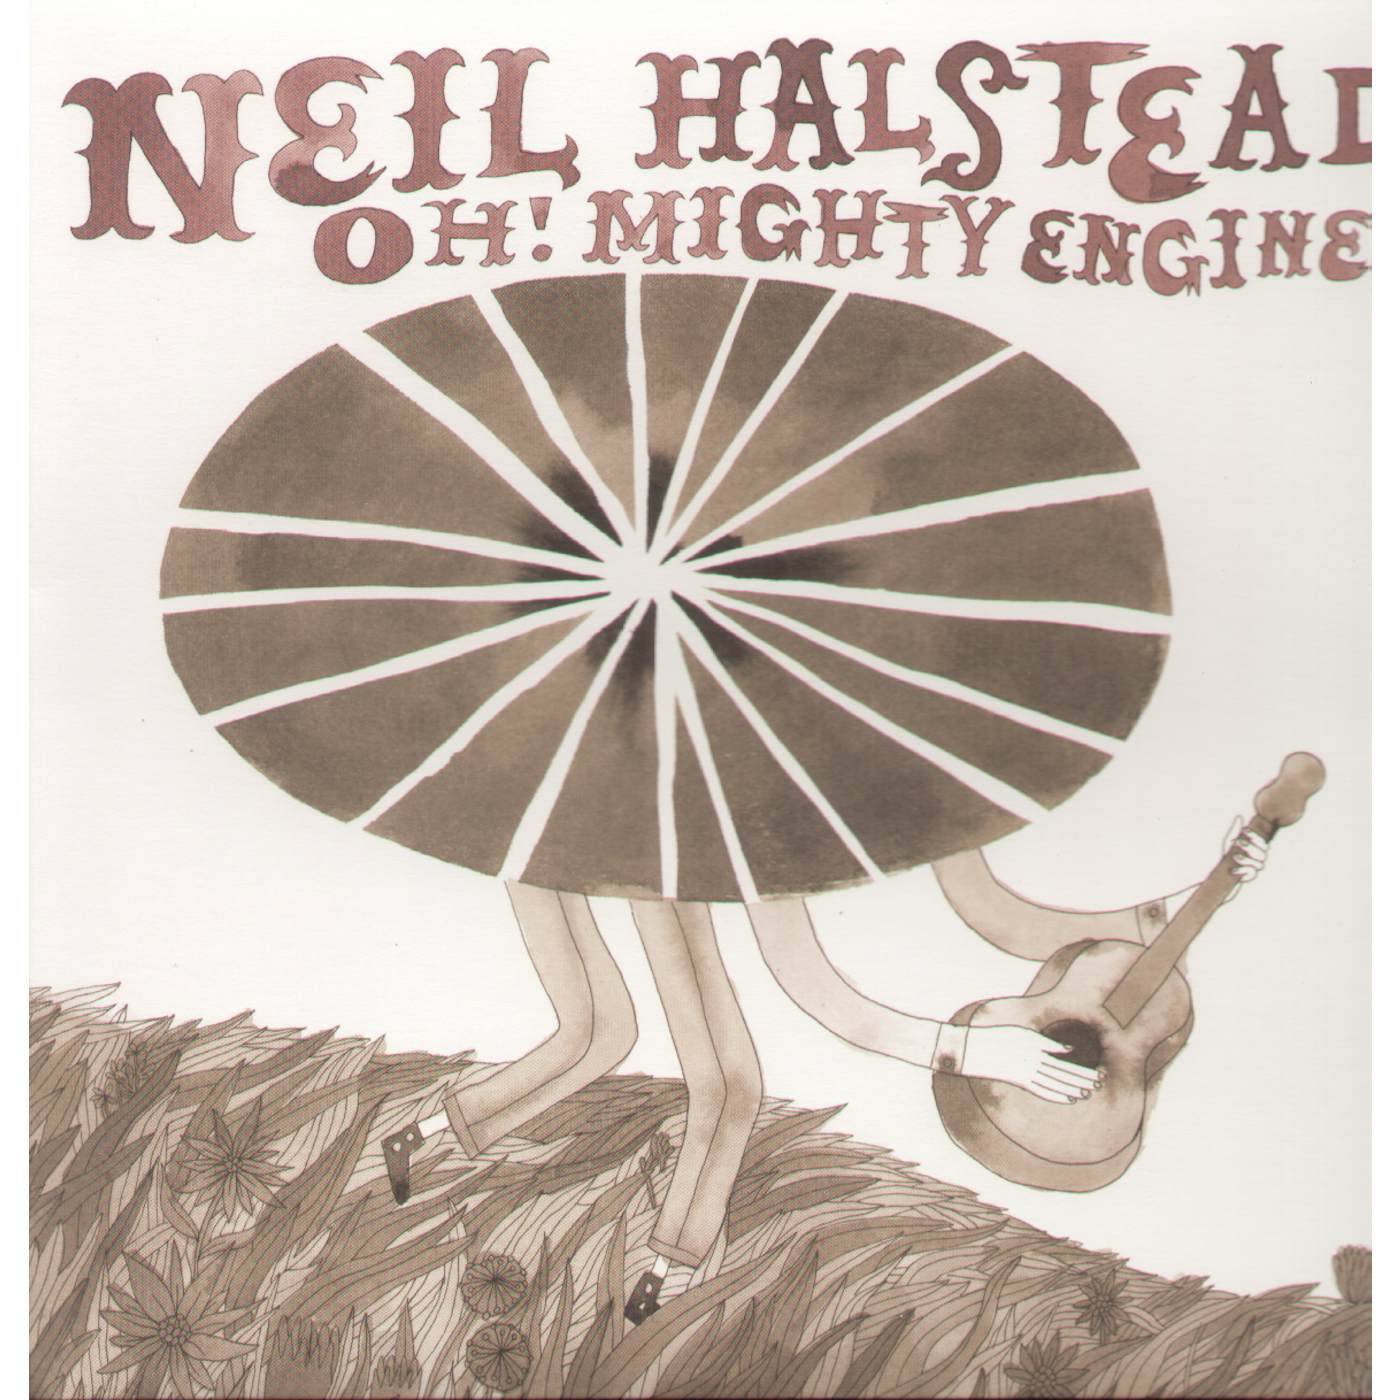 Neil Halstead OH MIGHTY ENGINE (Vinyl)